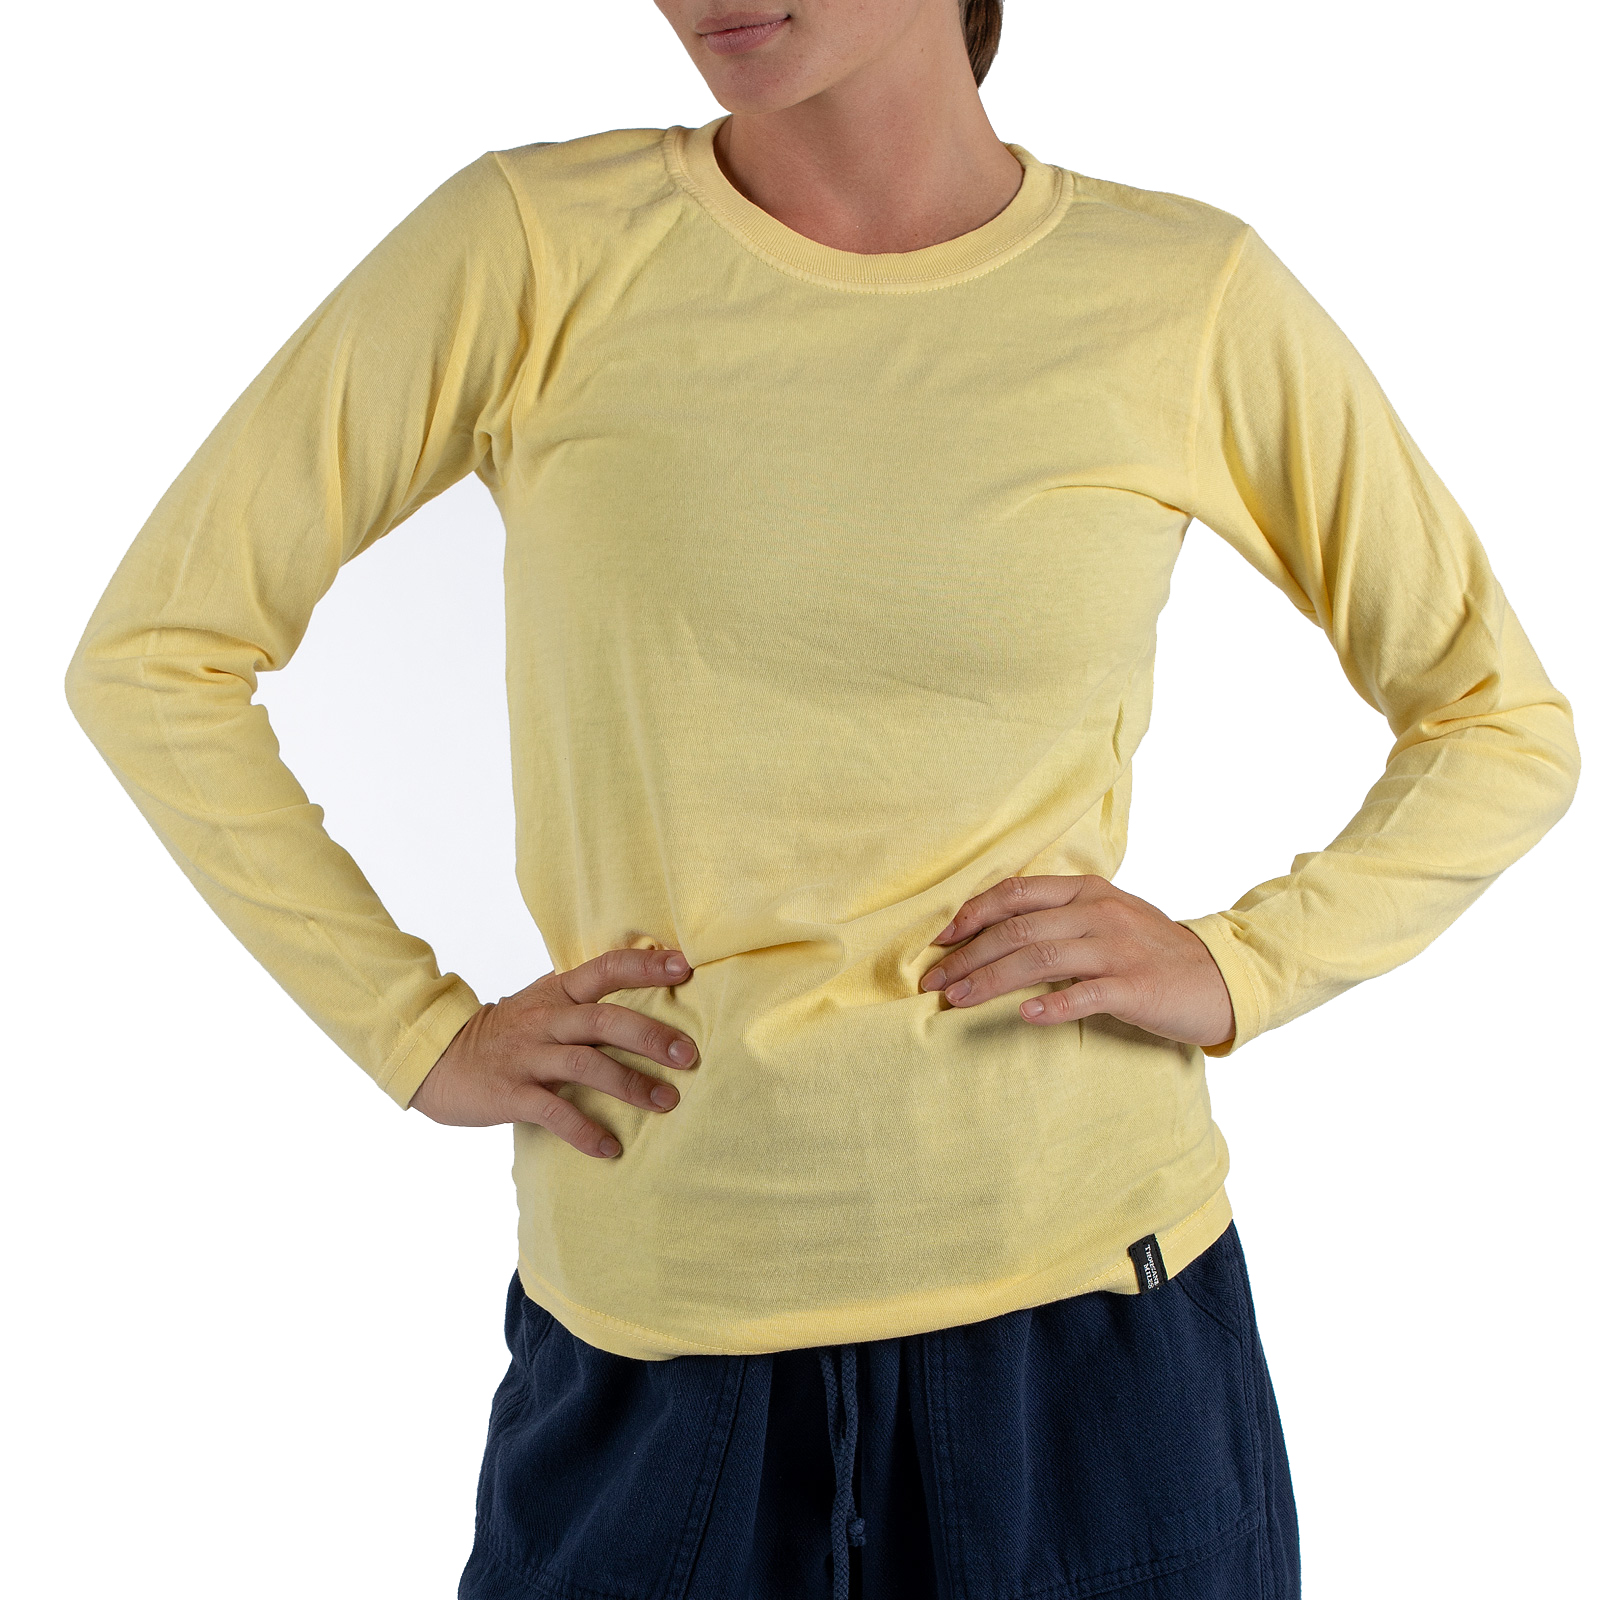 Hdaw Best Friend Womens Long Sleeve T-Shirts Cotton Tops Tee